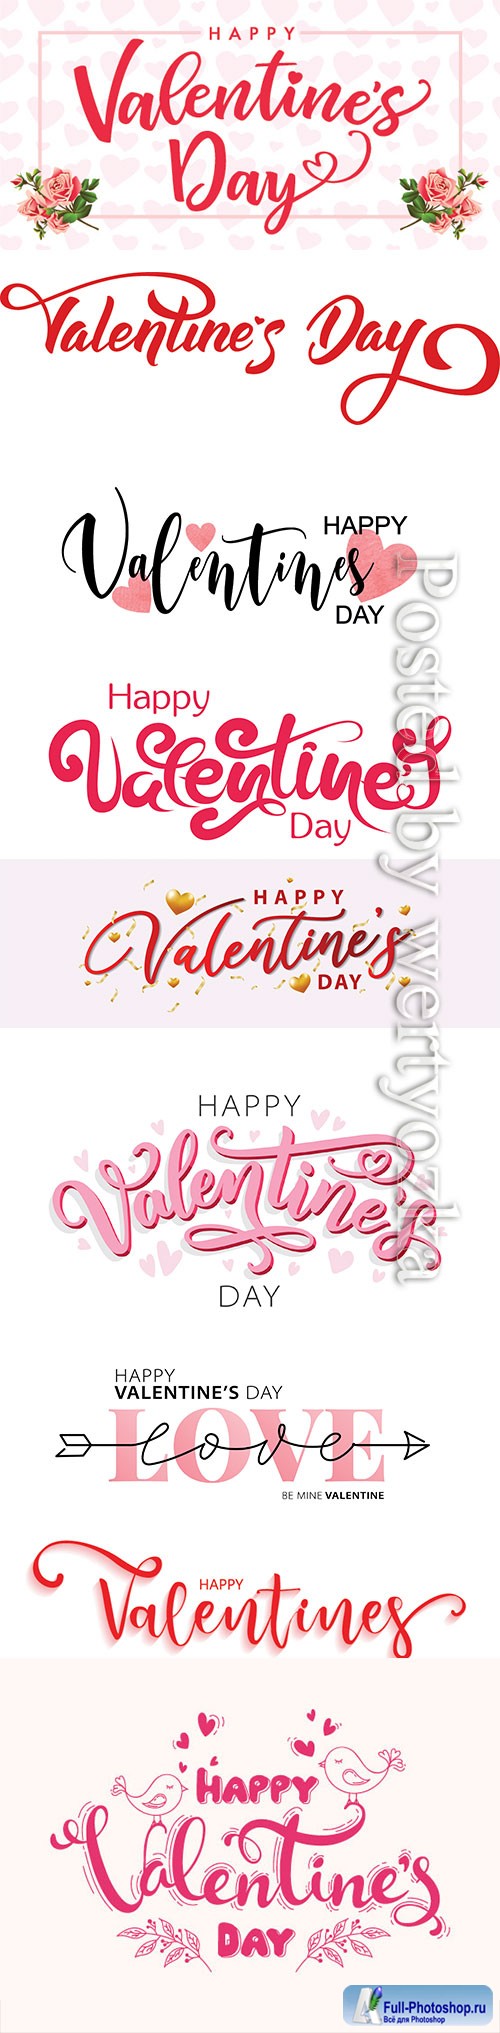 Happy Valentines Day elegant alligraphy banner